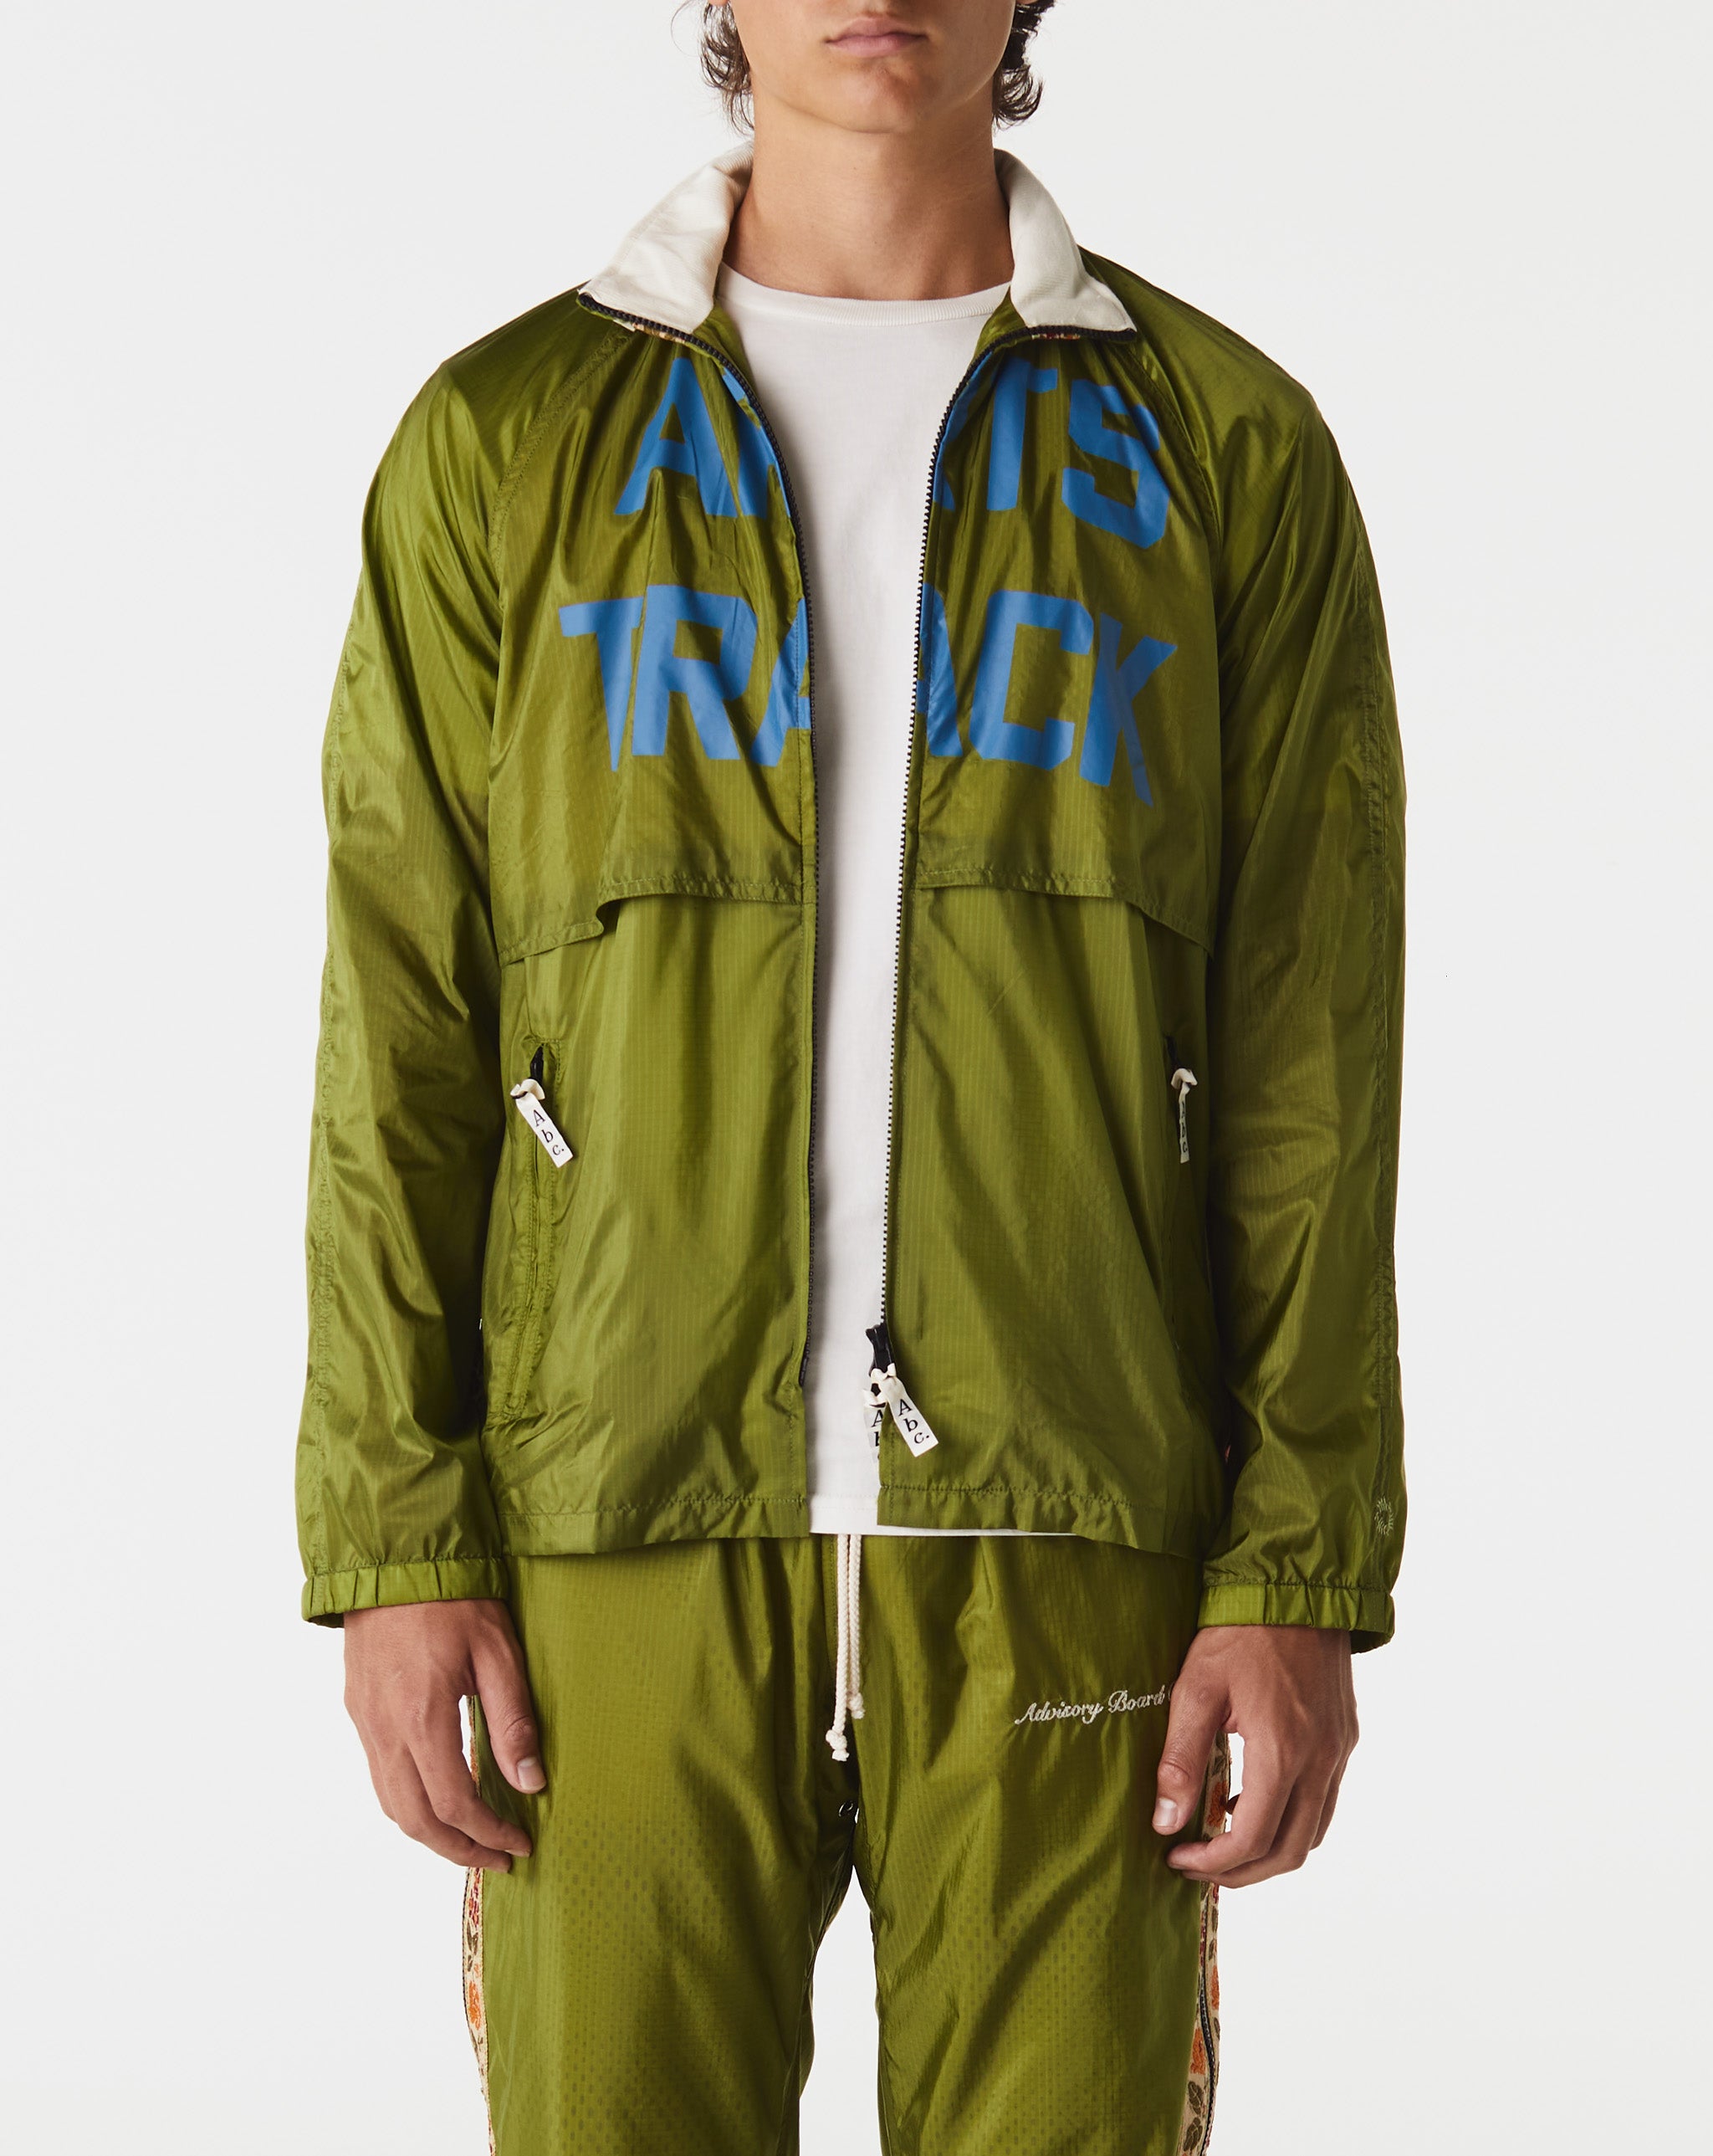 Sherpa Paneled Hooded Jacket Nike Authentics Varsity Jacket  - Cheap Erlebniswelt-fliegenfischen Jordan outlet